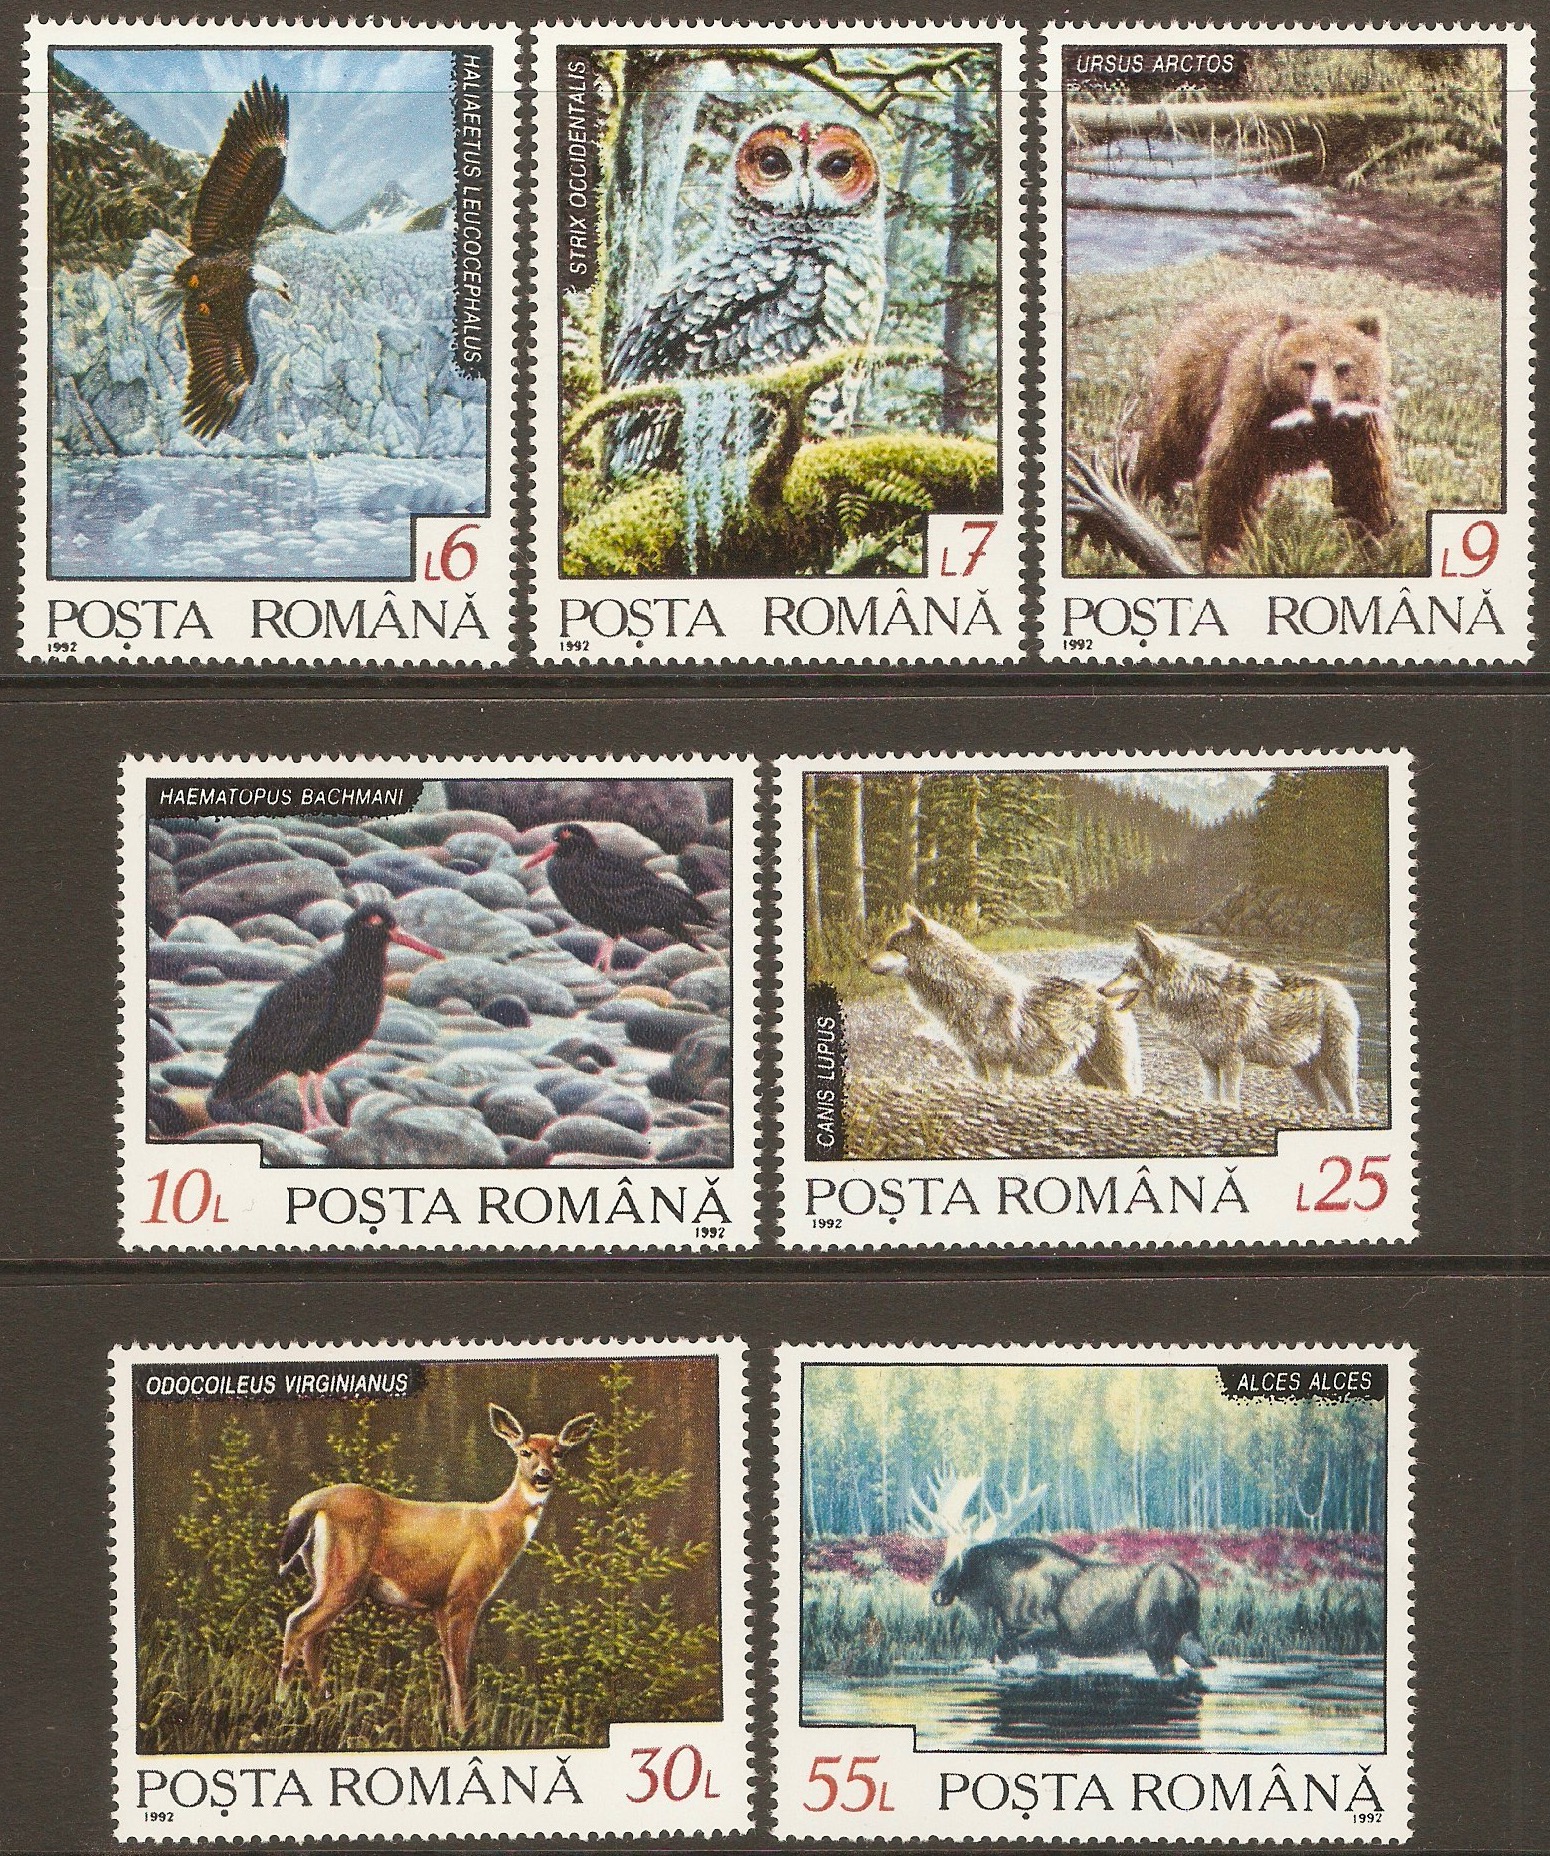 Romania 1992 Animals set. SG5478-SG5484.